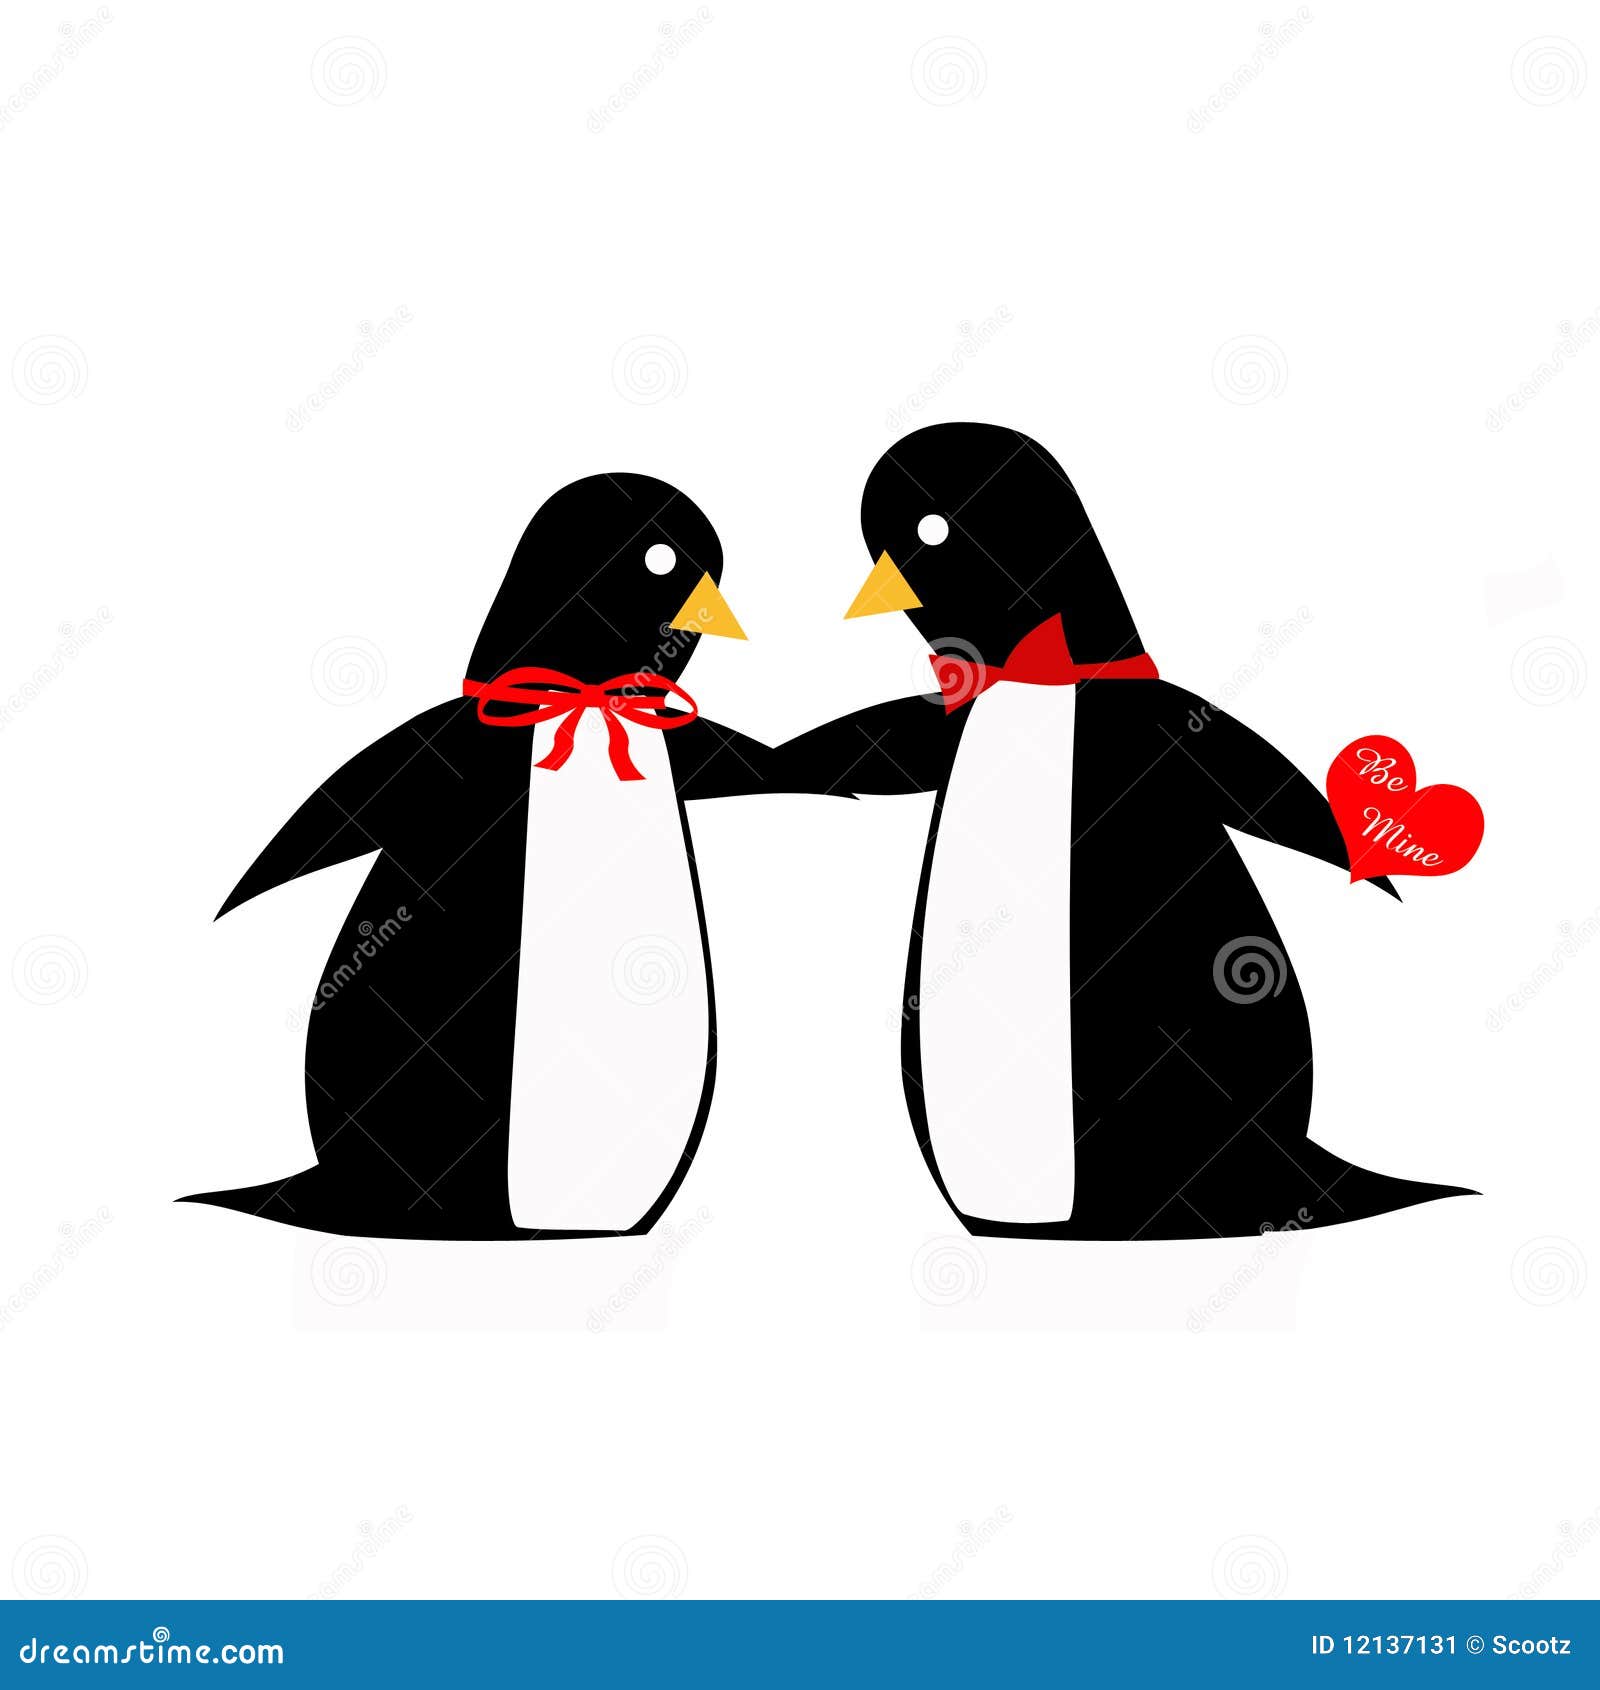 penguin valentine clipart - photo #20